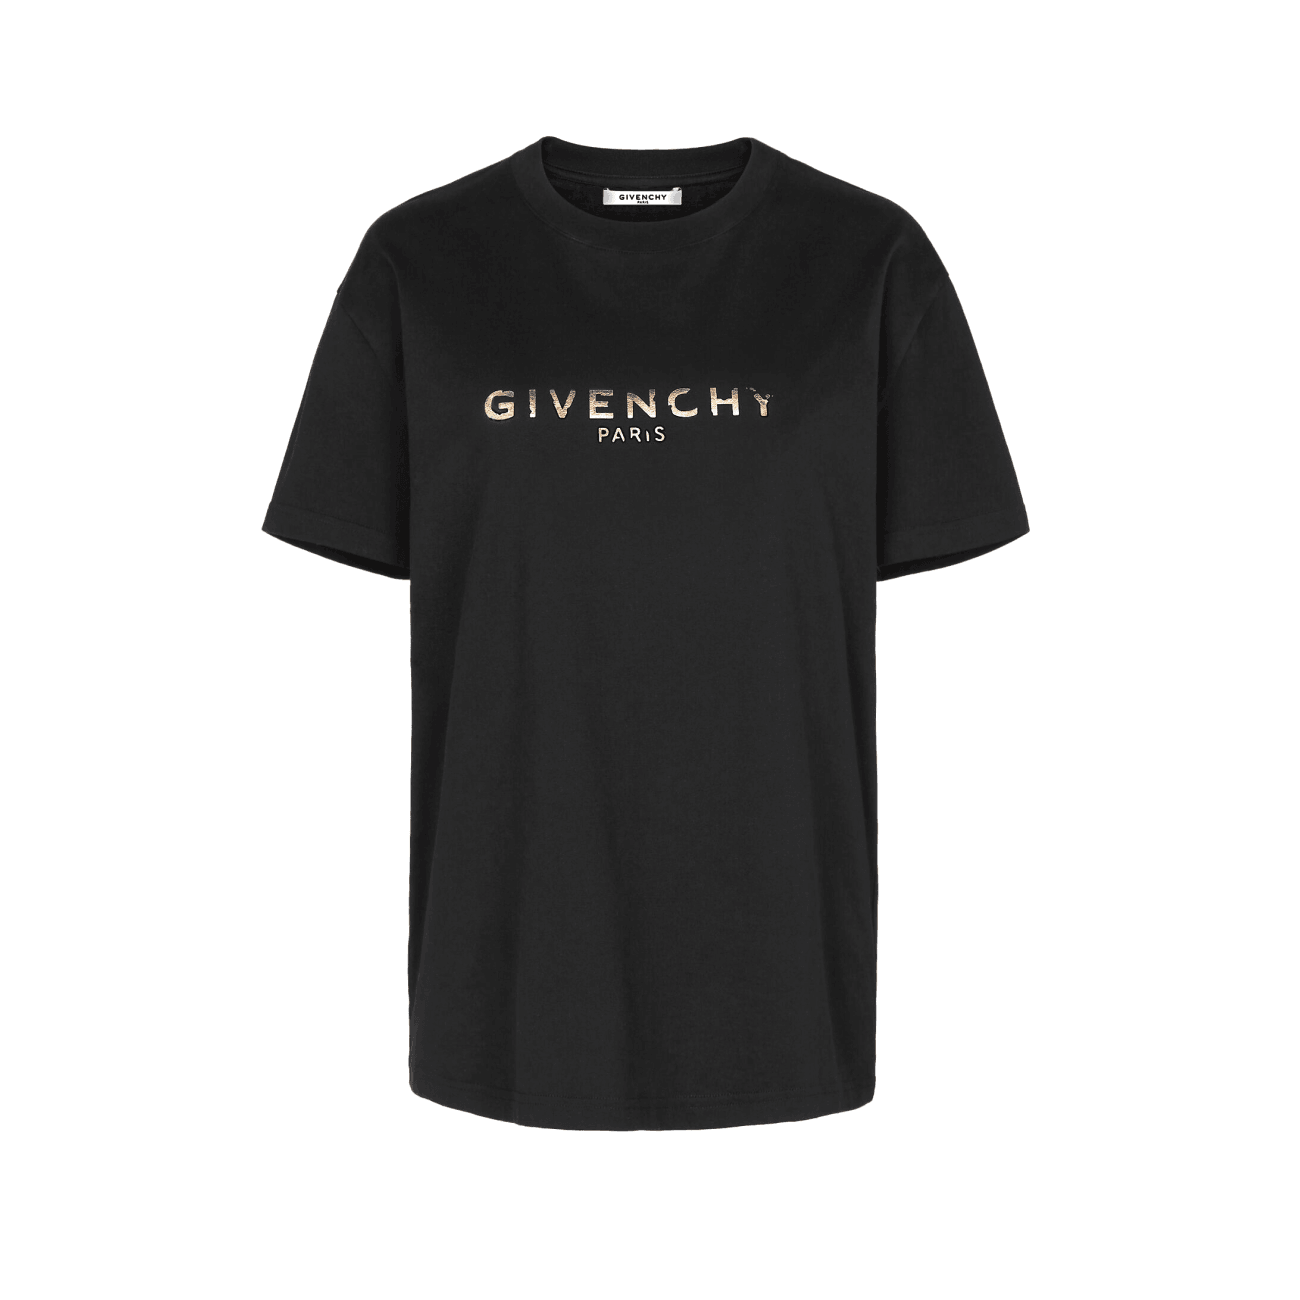 Givenchy BW70603Z2L 001 Vintage Givenchy Paris Masculine Fit Women's T-Shirt, Black - STYLIAN